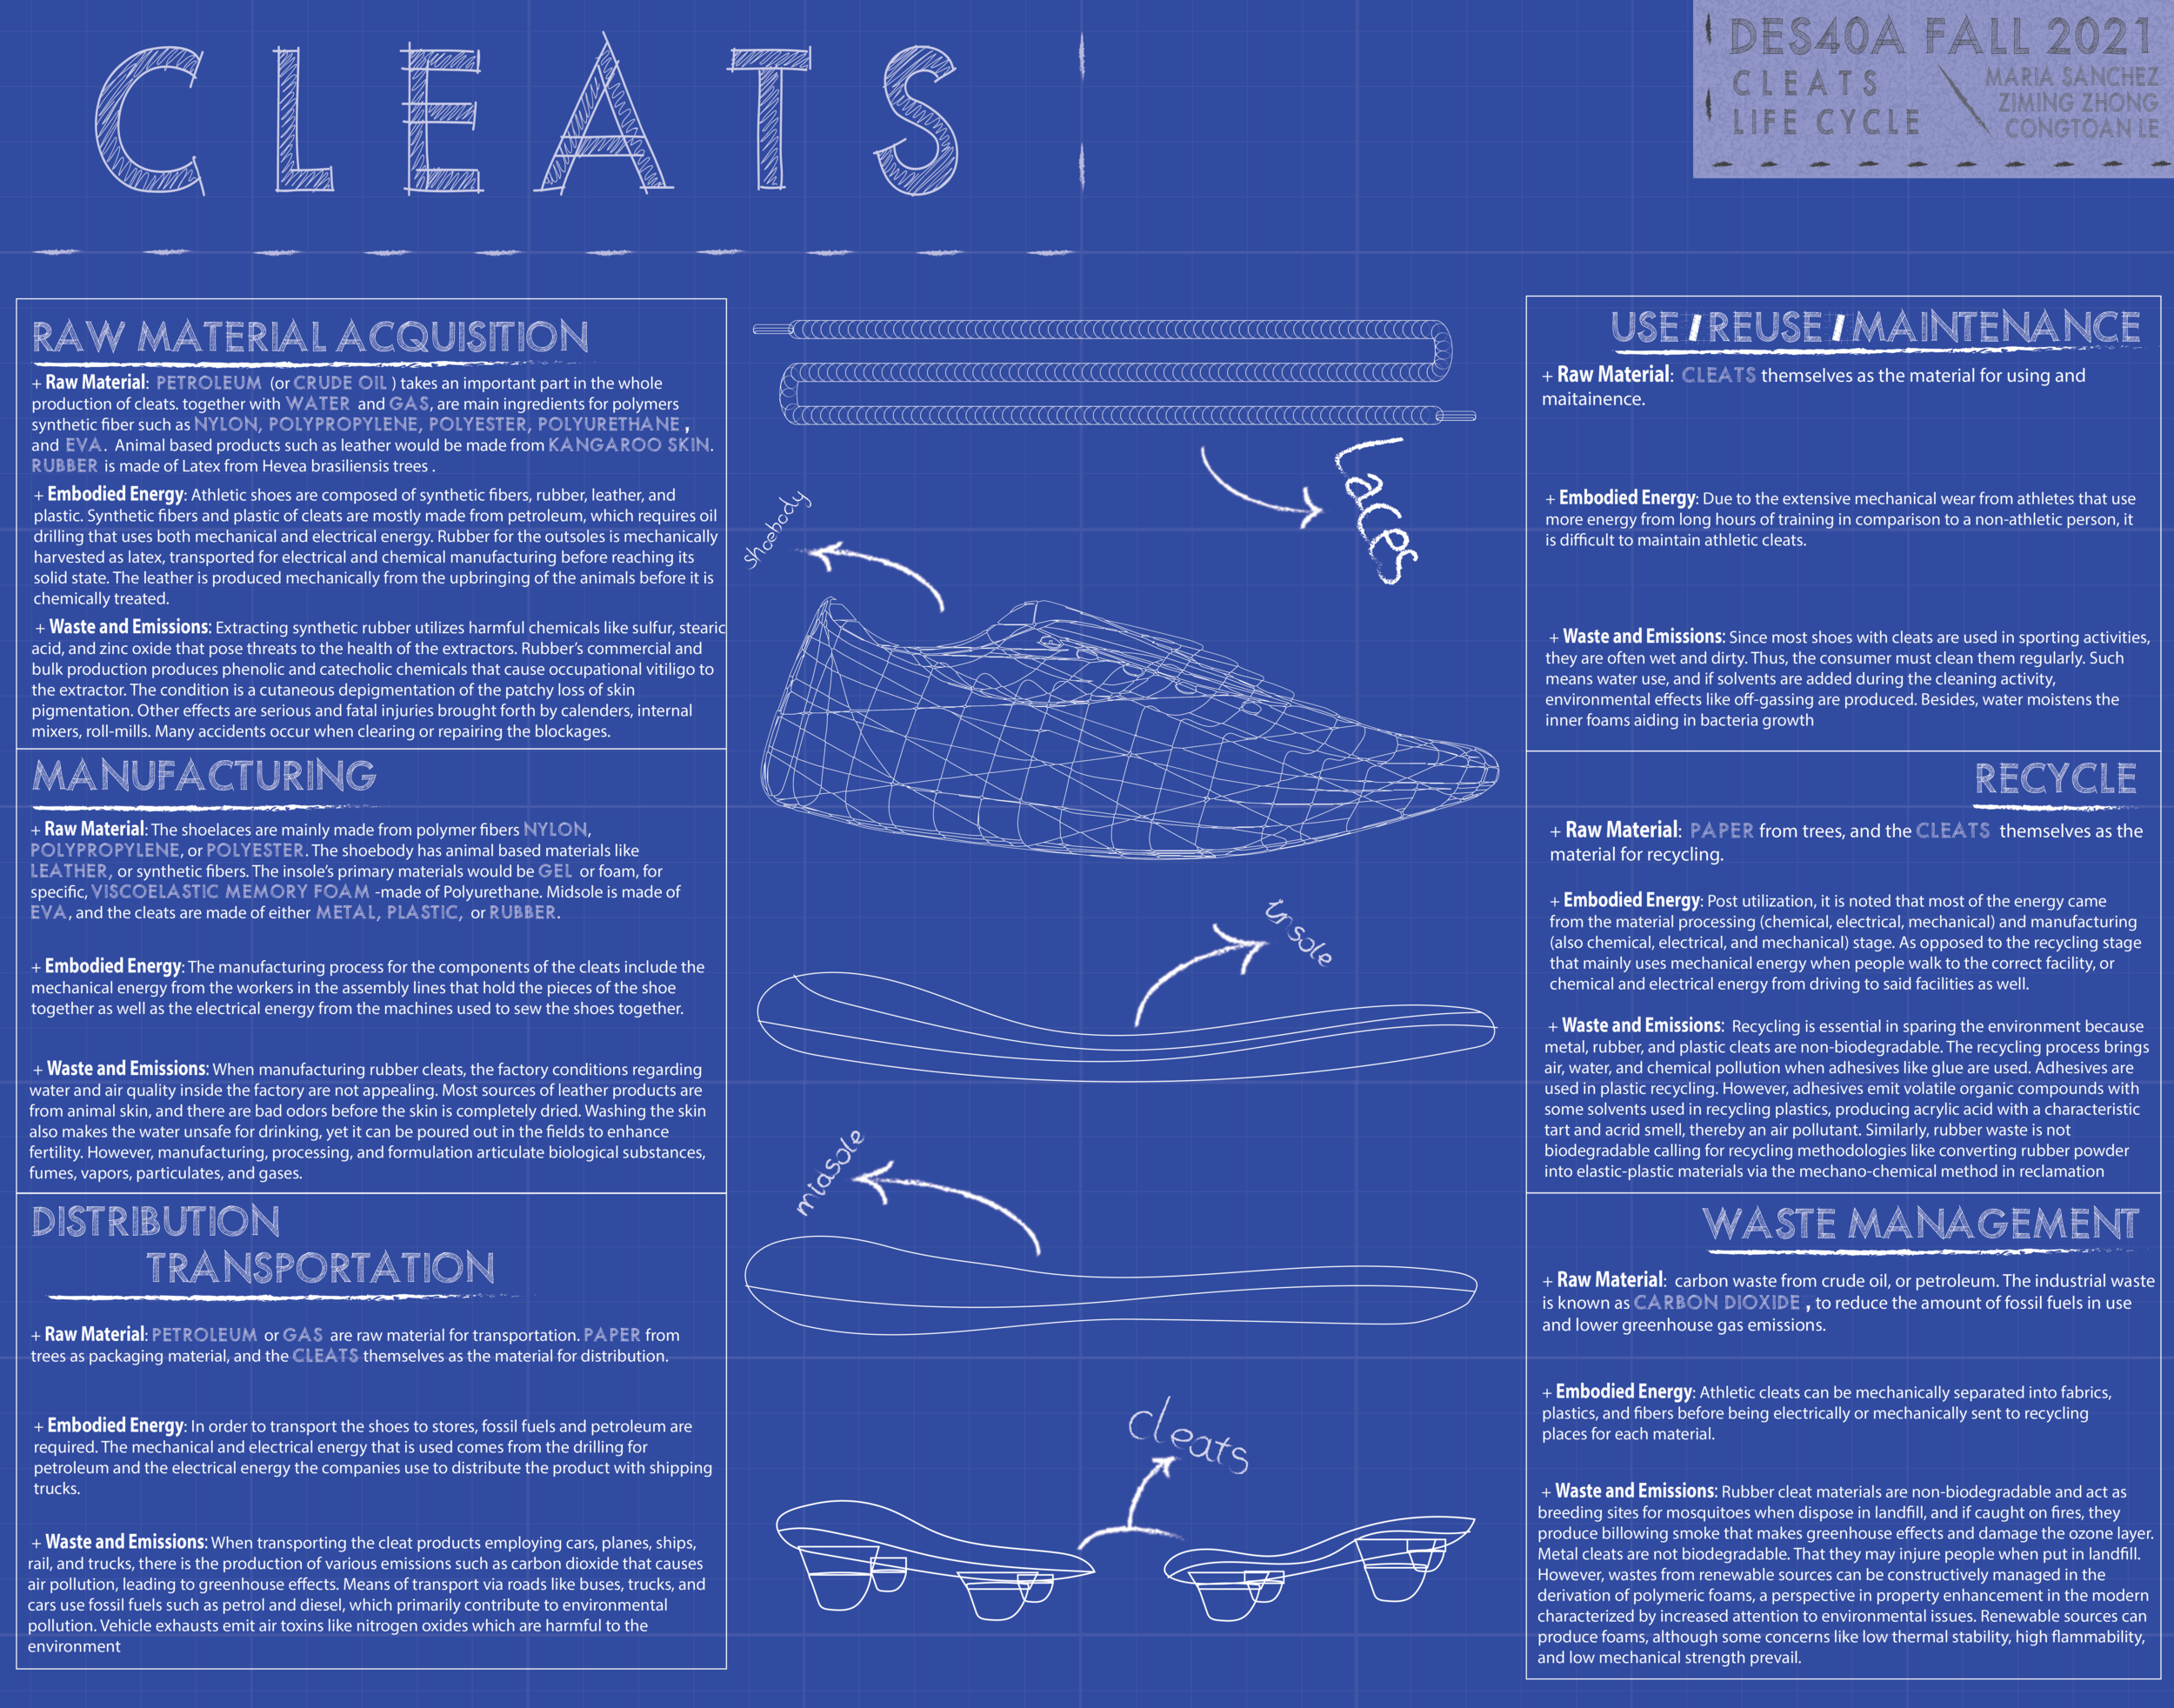 Designer Pattern Low Football Cleats